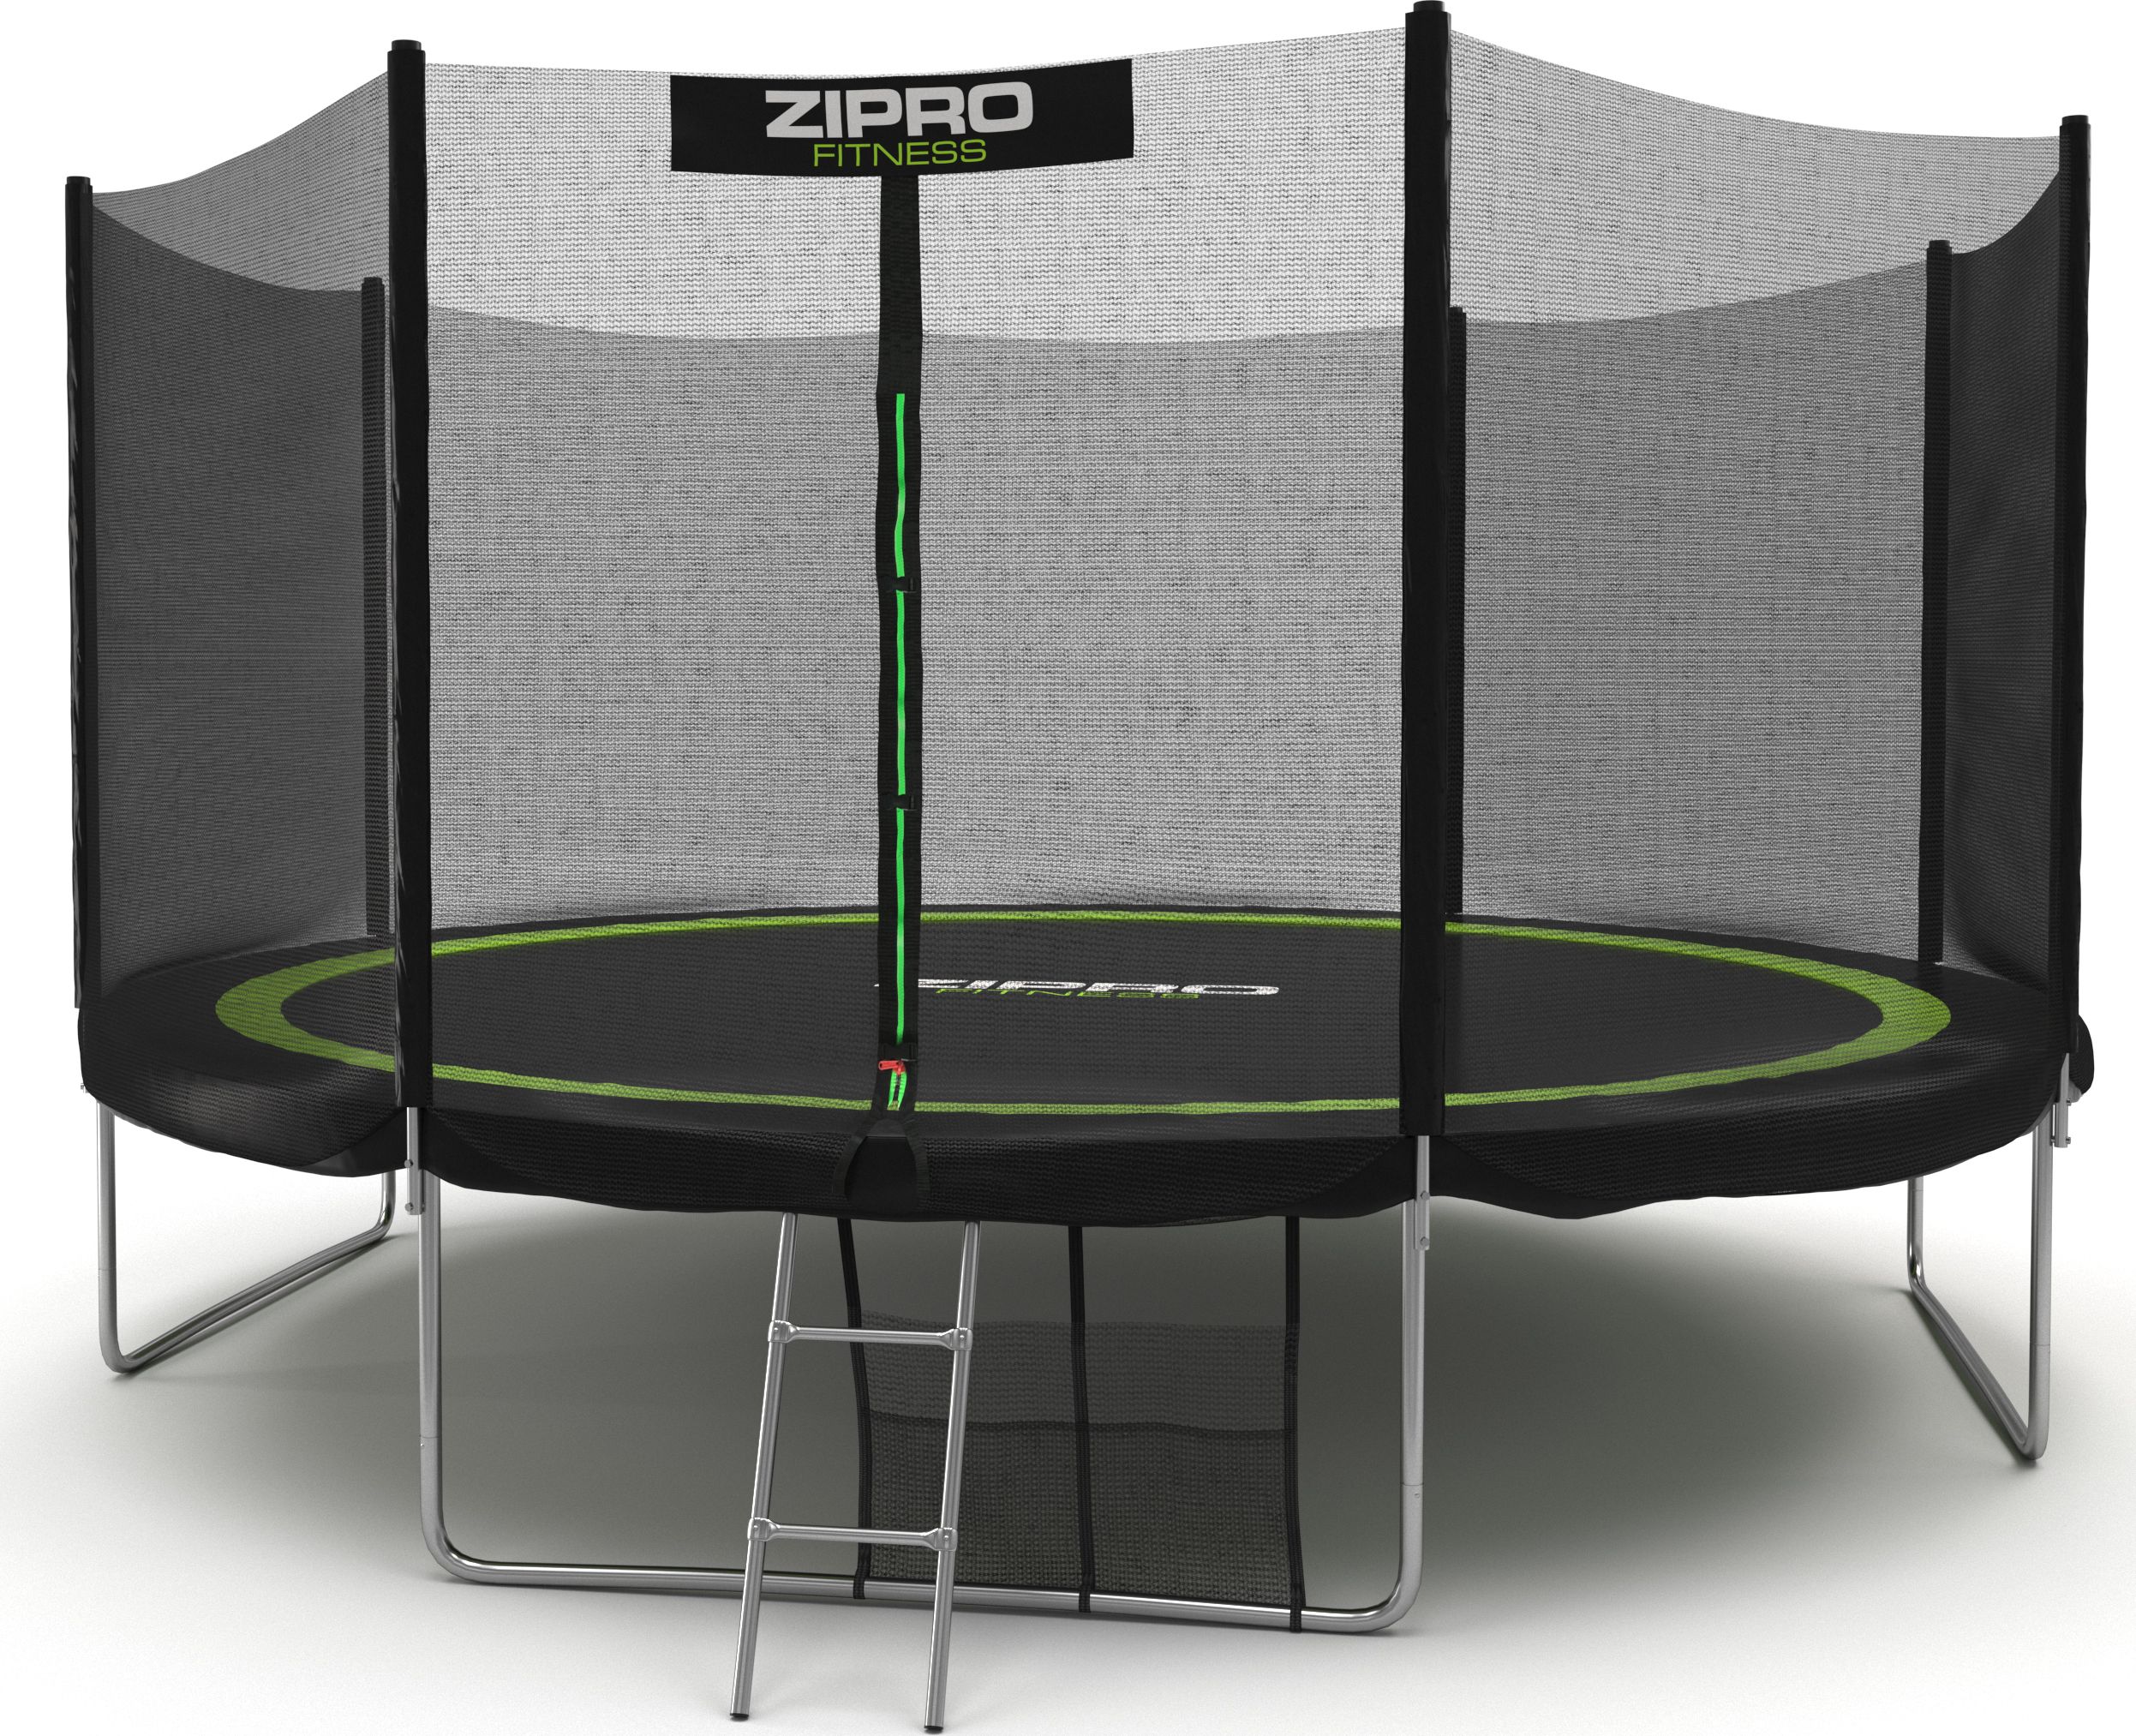 Zipro Garden trampoline with external net 14FT 435cm + free shoe bag! Batuts